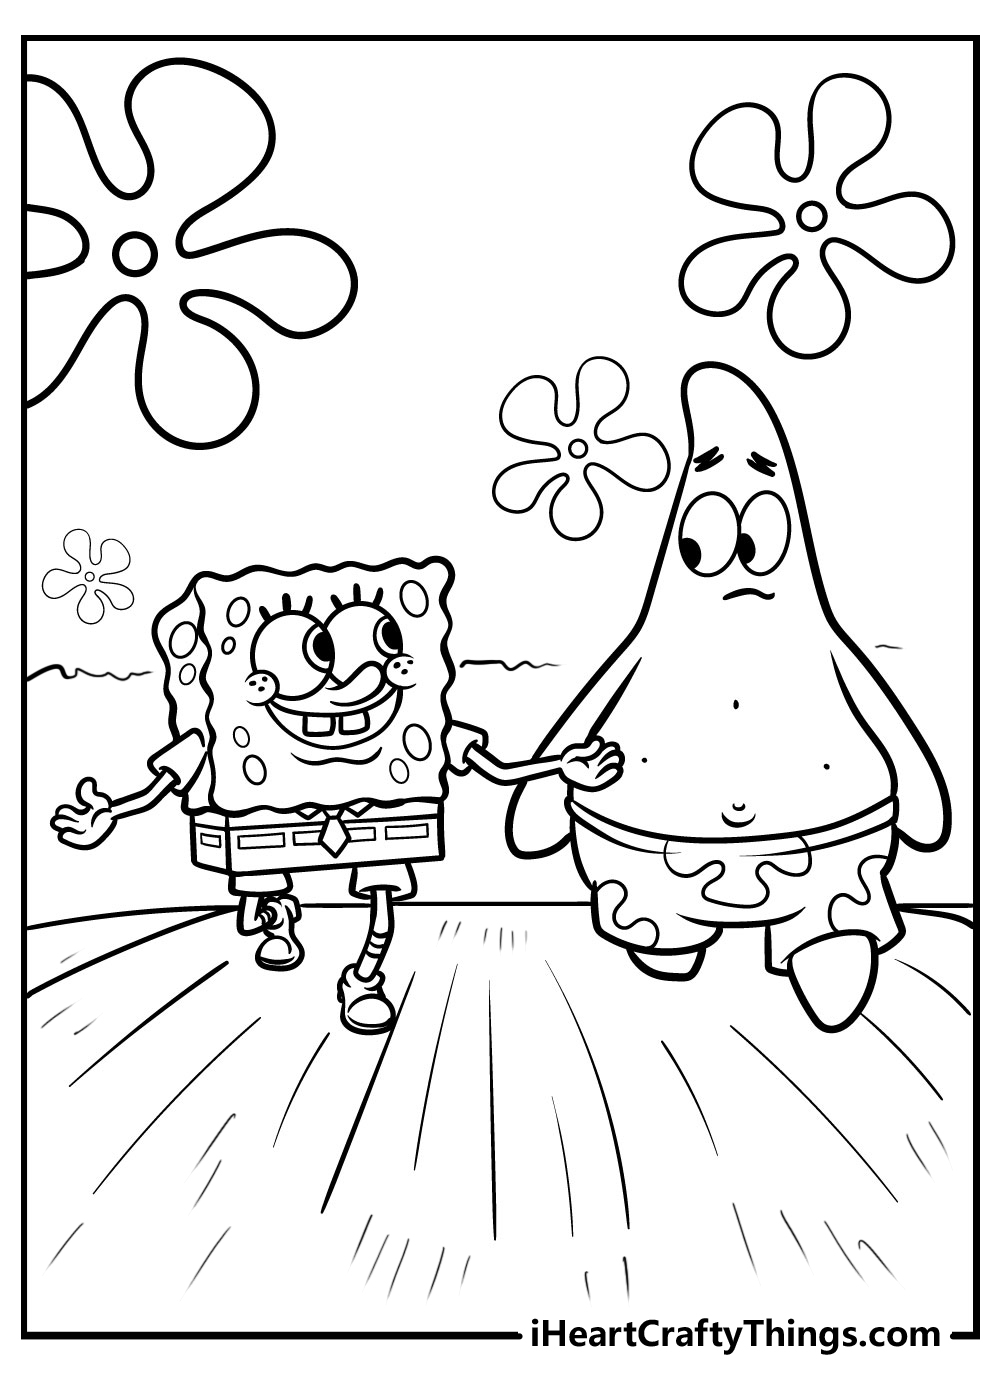 20-super-fun-spongebob-coloring-pages